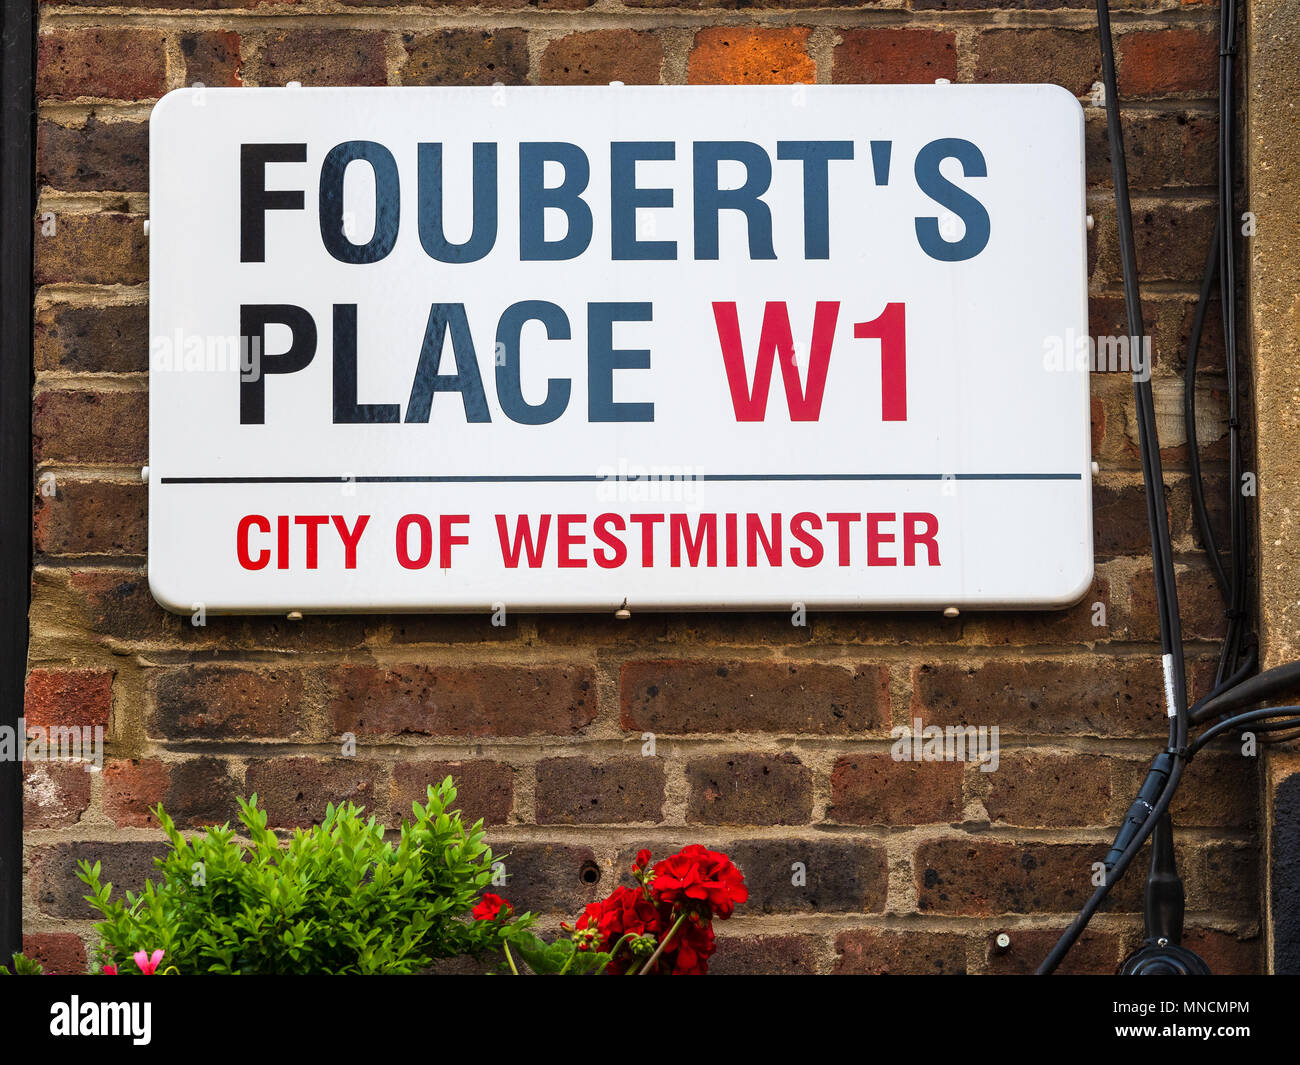 Soho Street serie di segni - Foubert's Place - Londra quartiere Soho di segnaletica stradale Foto Stock